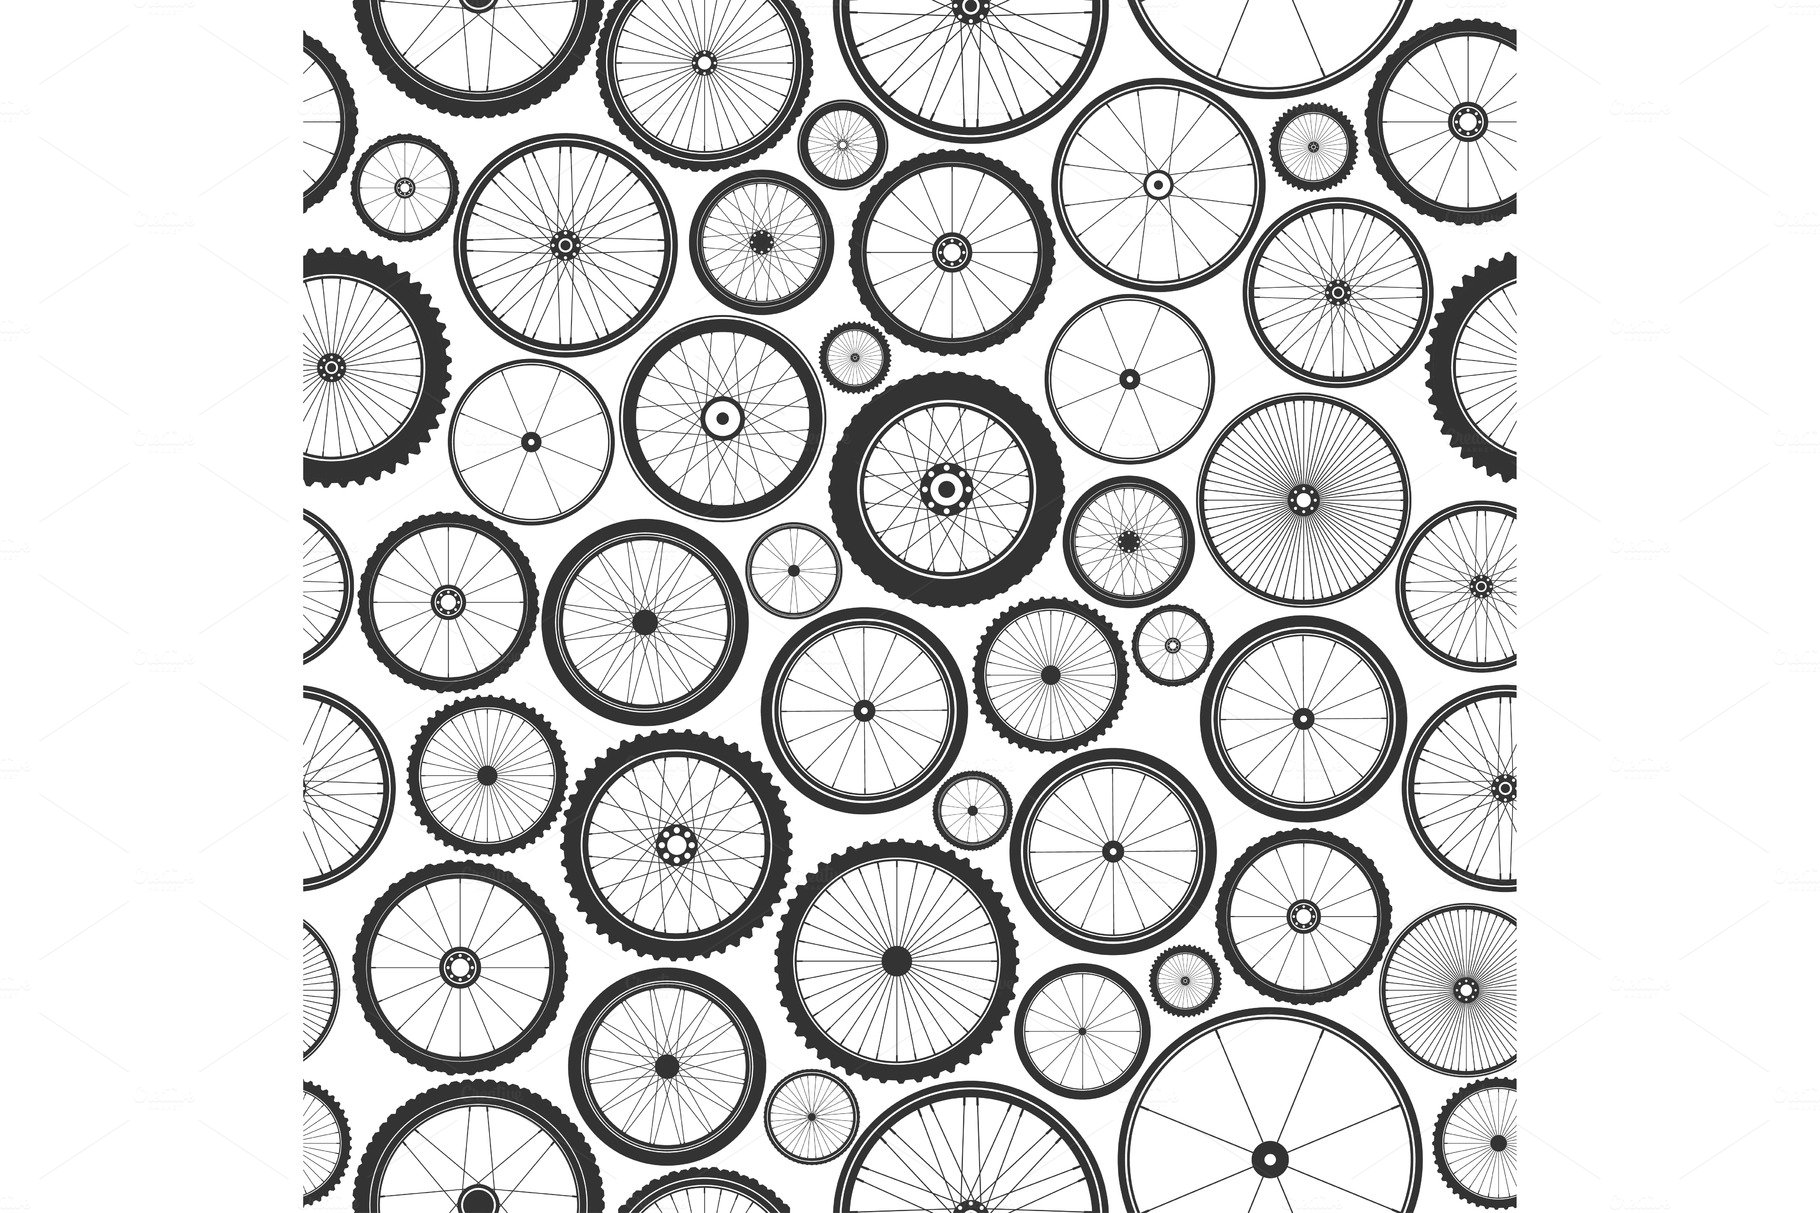 Bicycle wheel seamless pattern. Bike cover image.